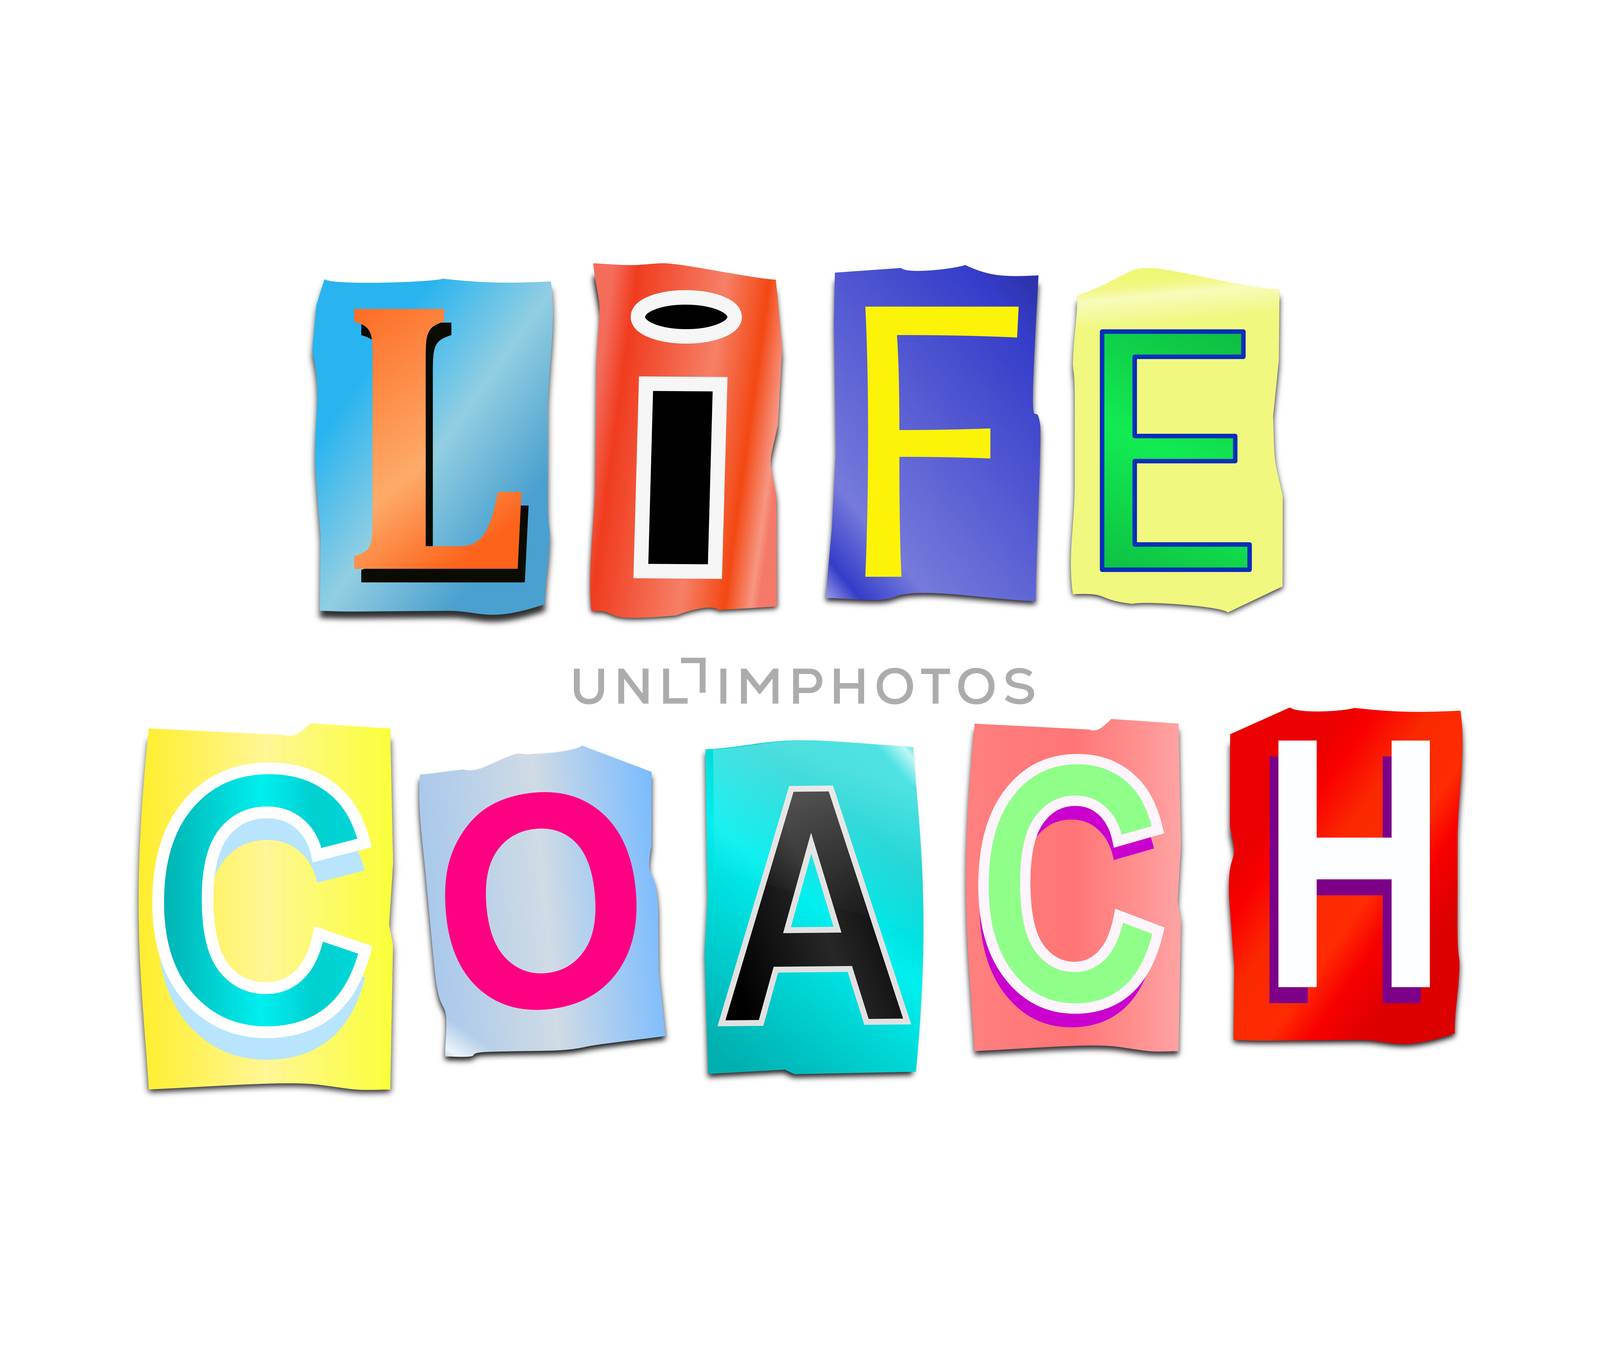 Life coach concept. by 72soul